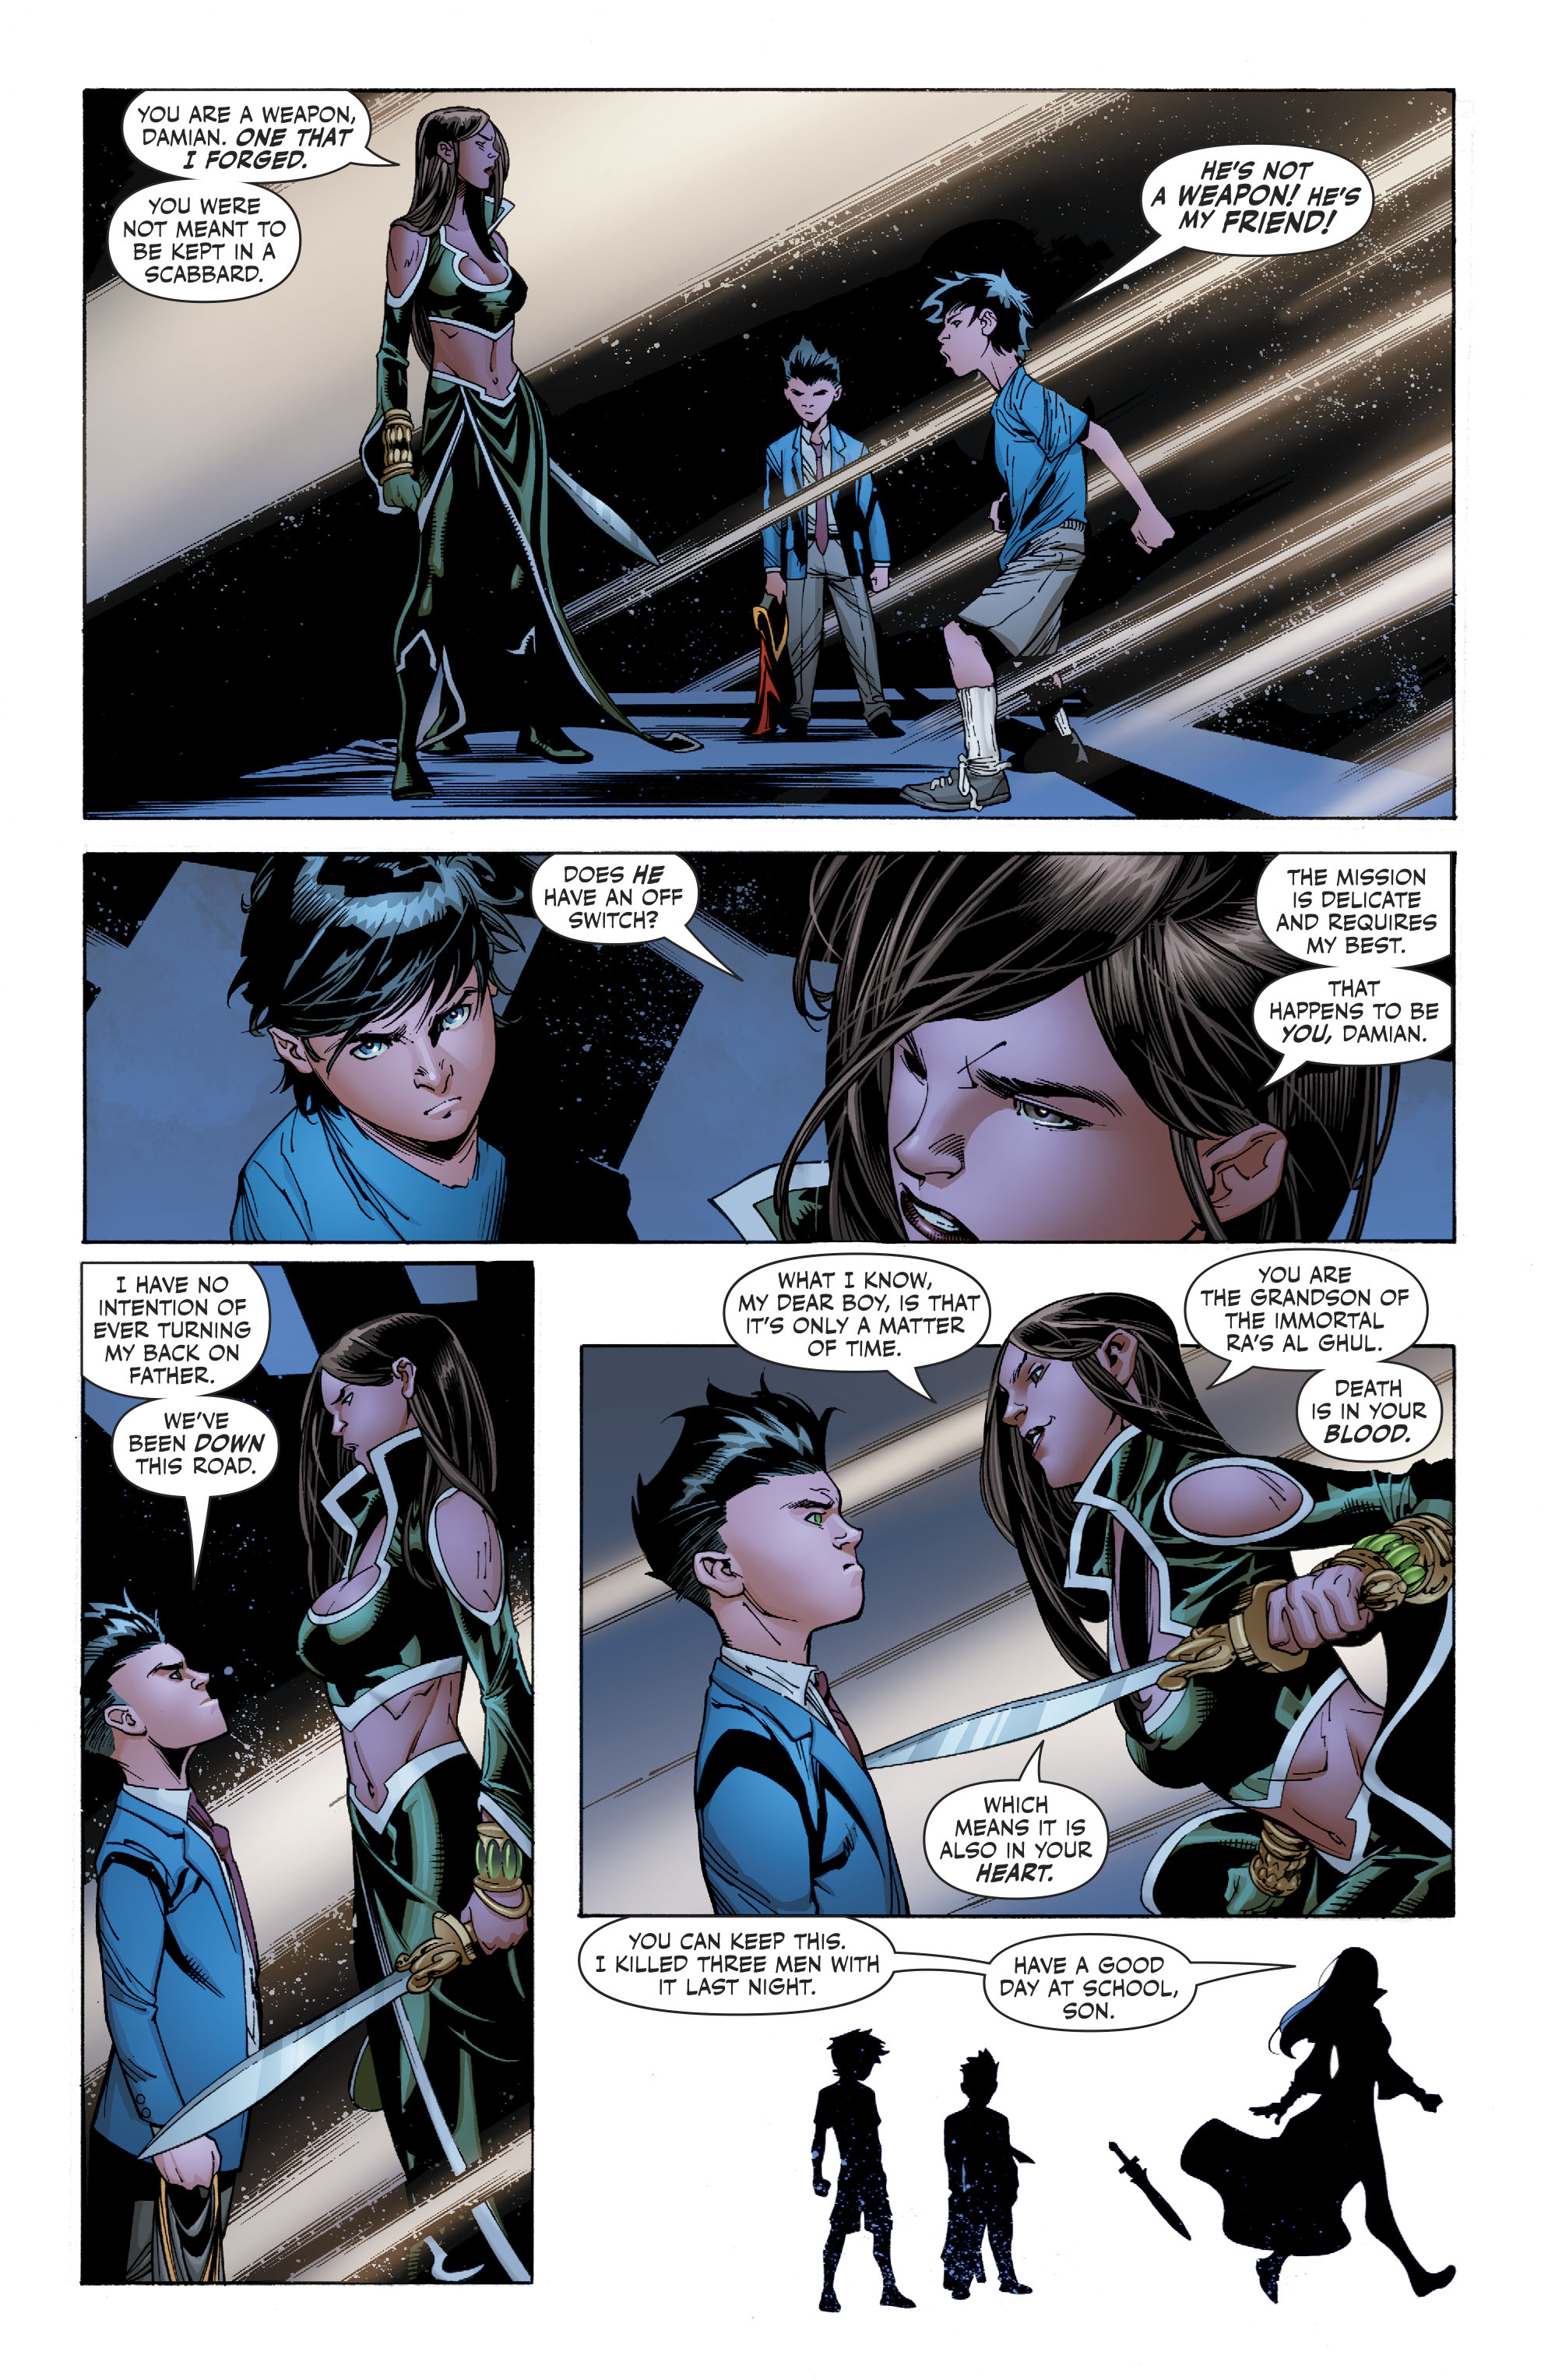 Superboy Meets Talia Al Ghul (Rebirth) 